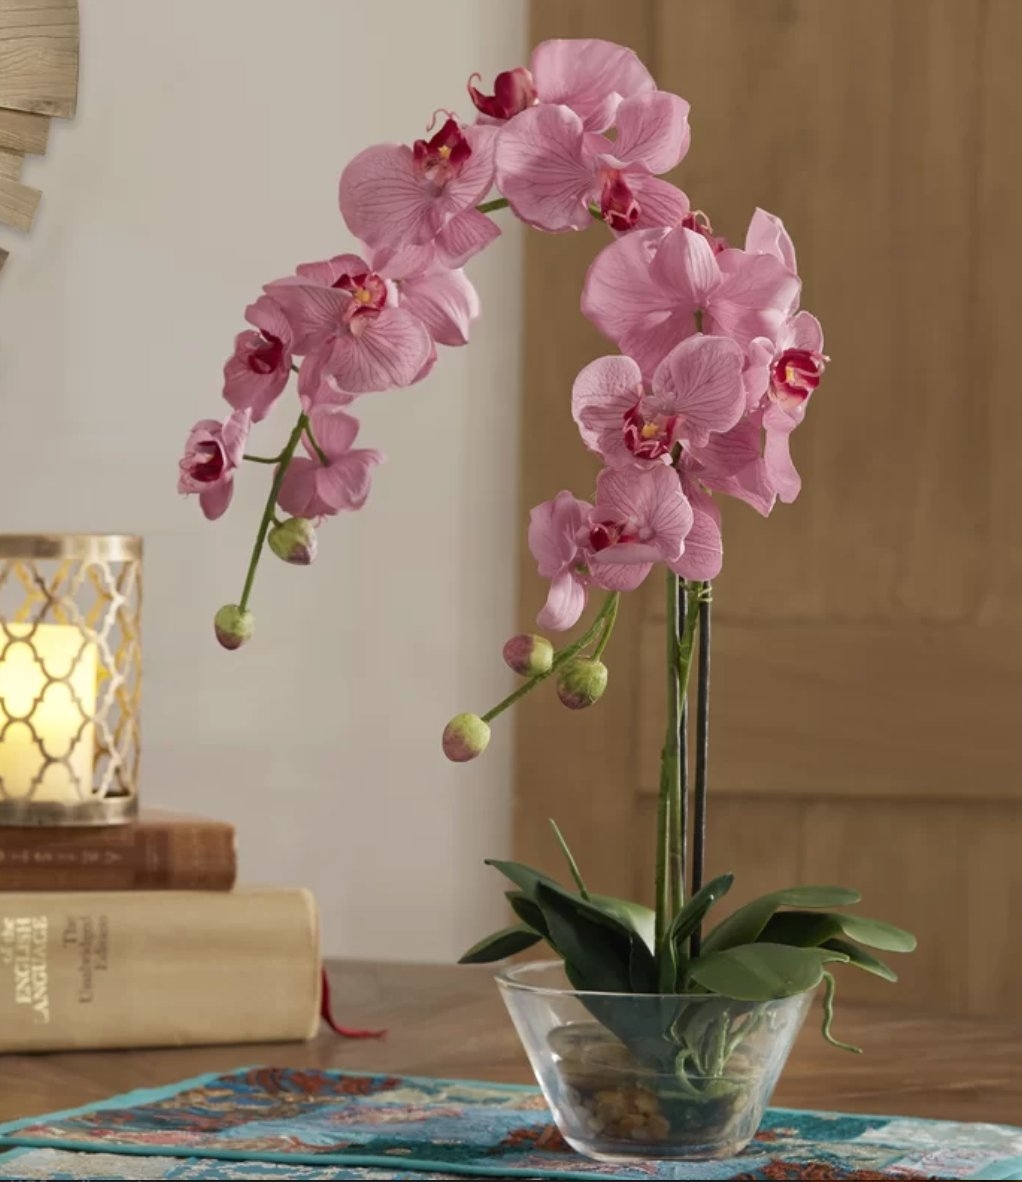 Orchid Floral Arrangement in Glass Vase - Image 1